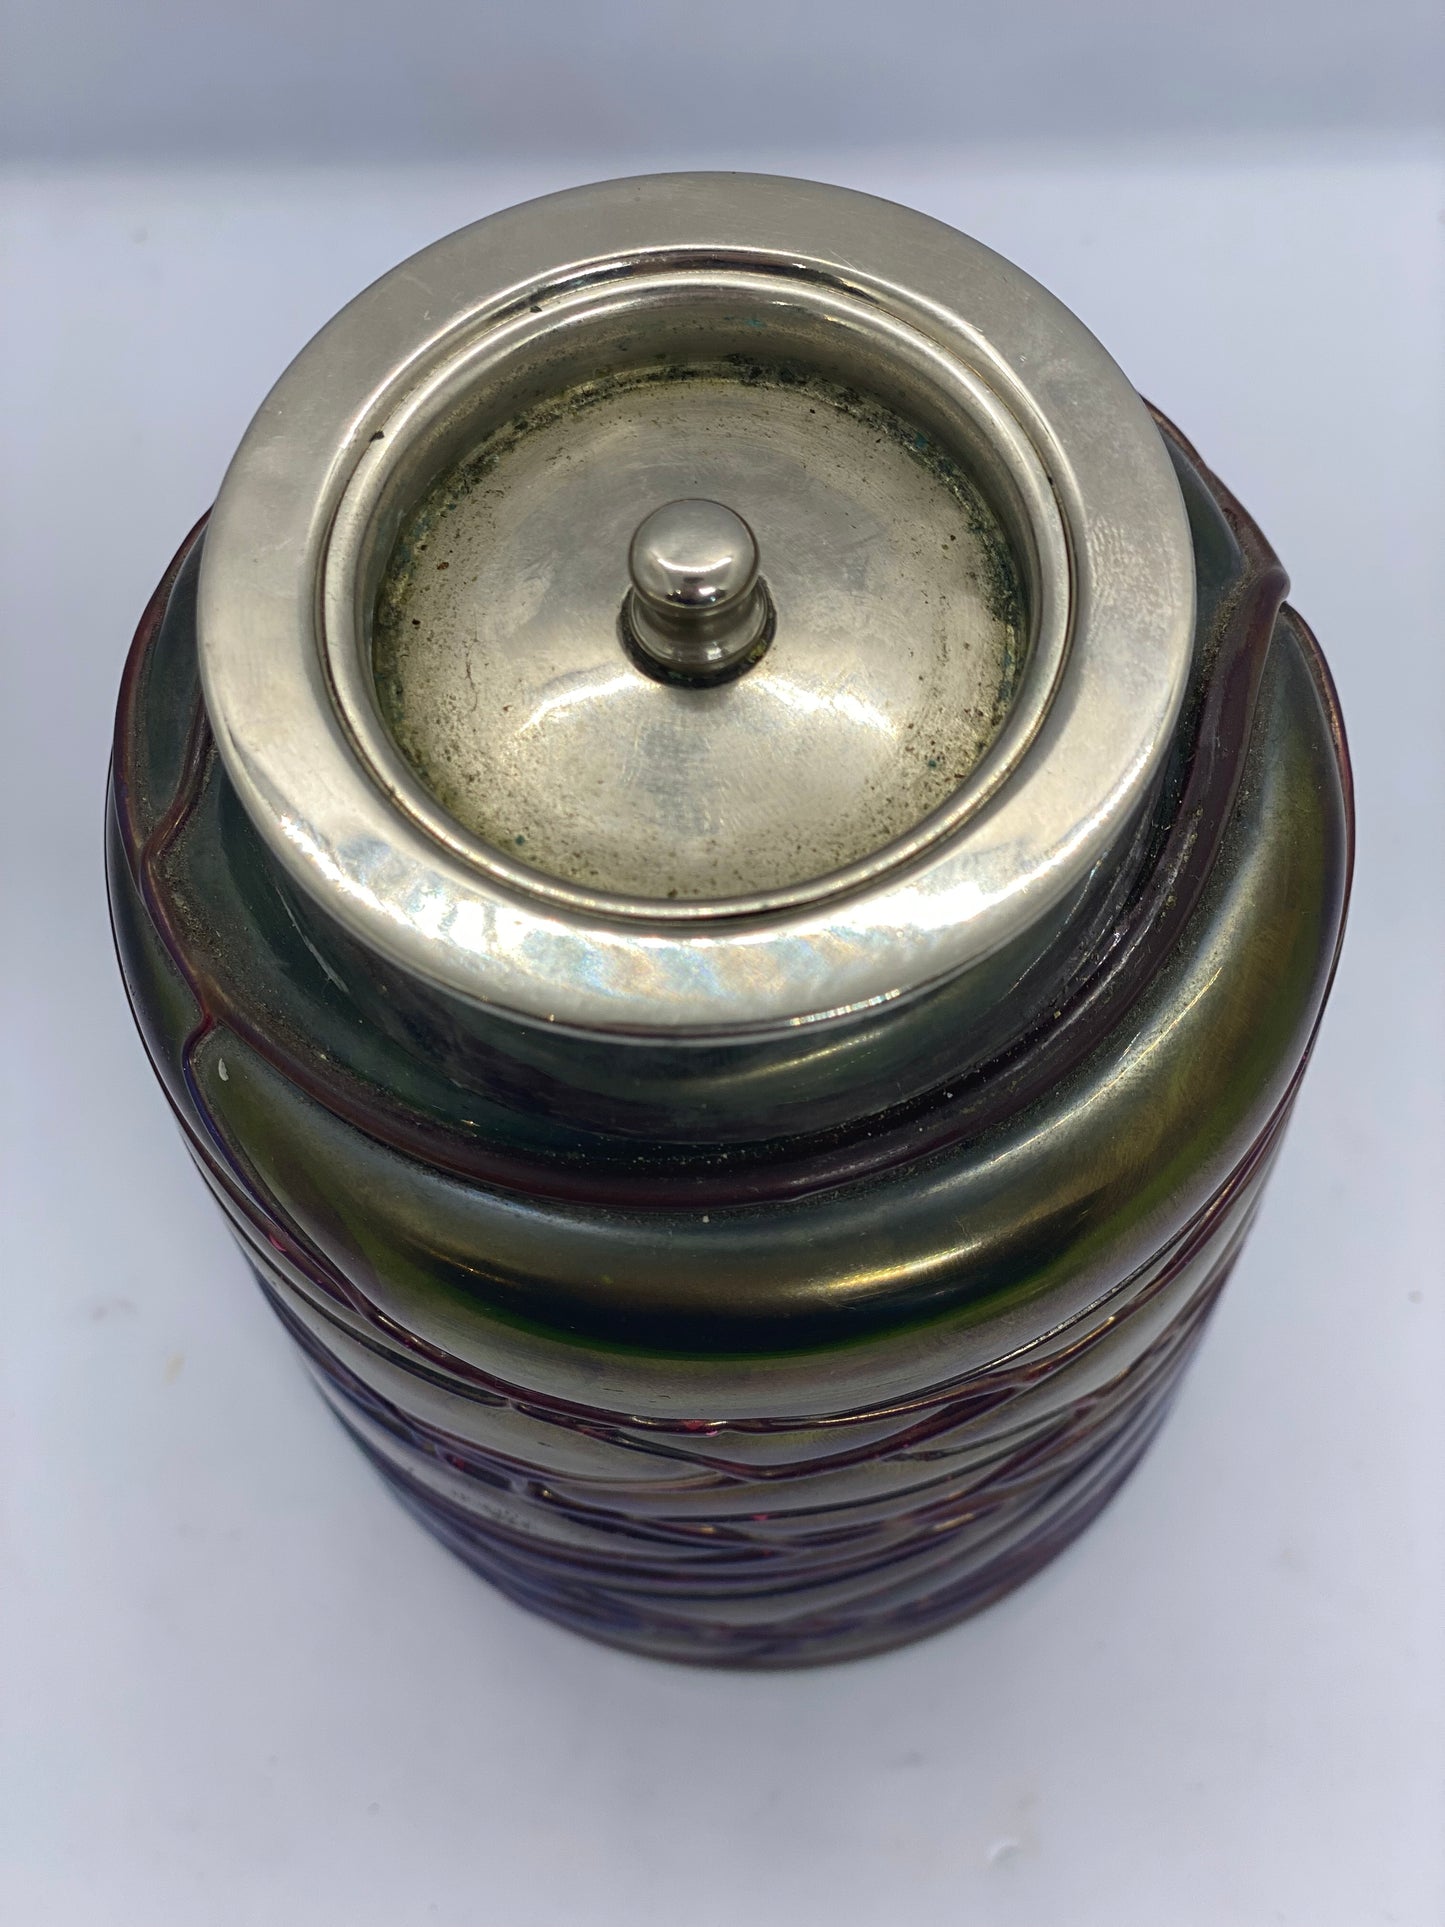 Pallme-Konig 烟草罐，约 1890 年至 1900 年代 *早期罕见样品*